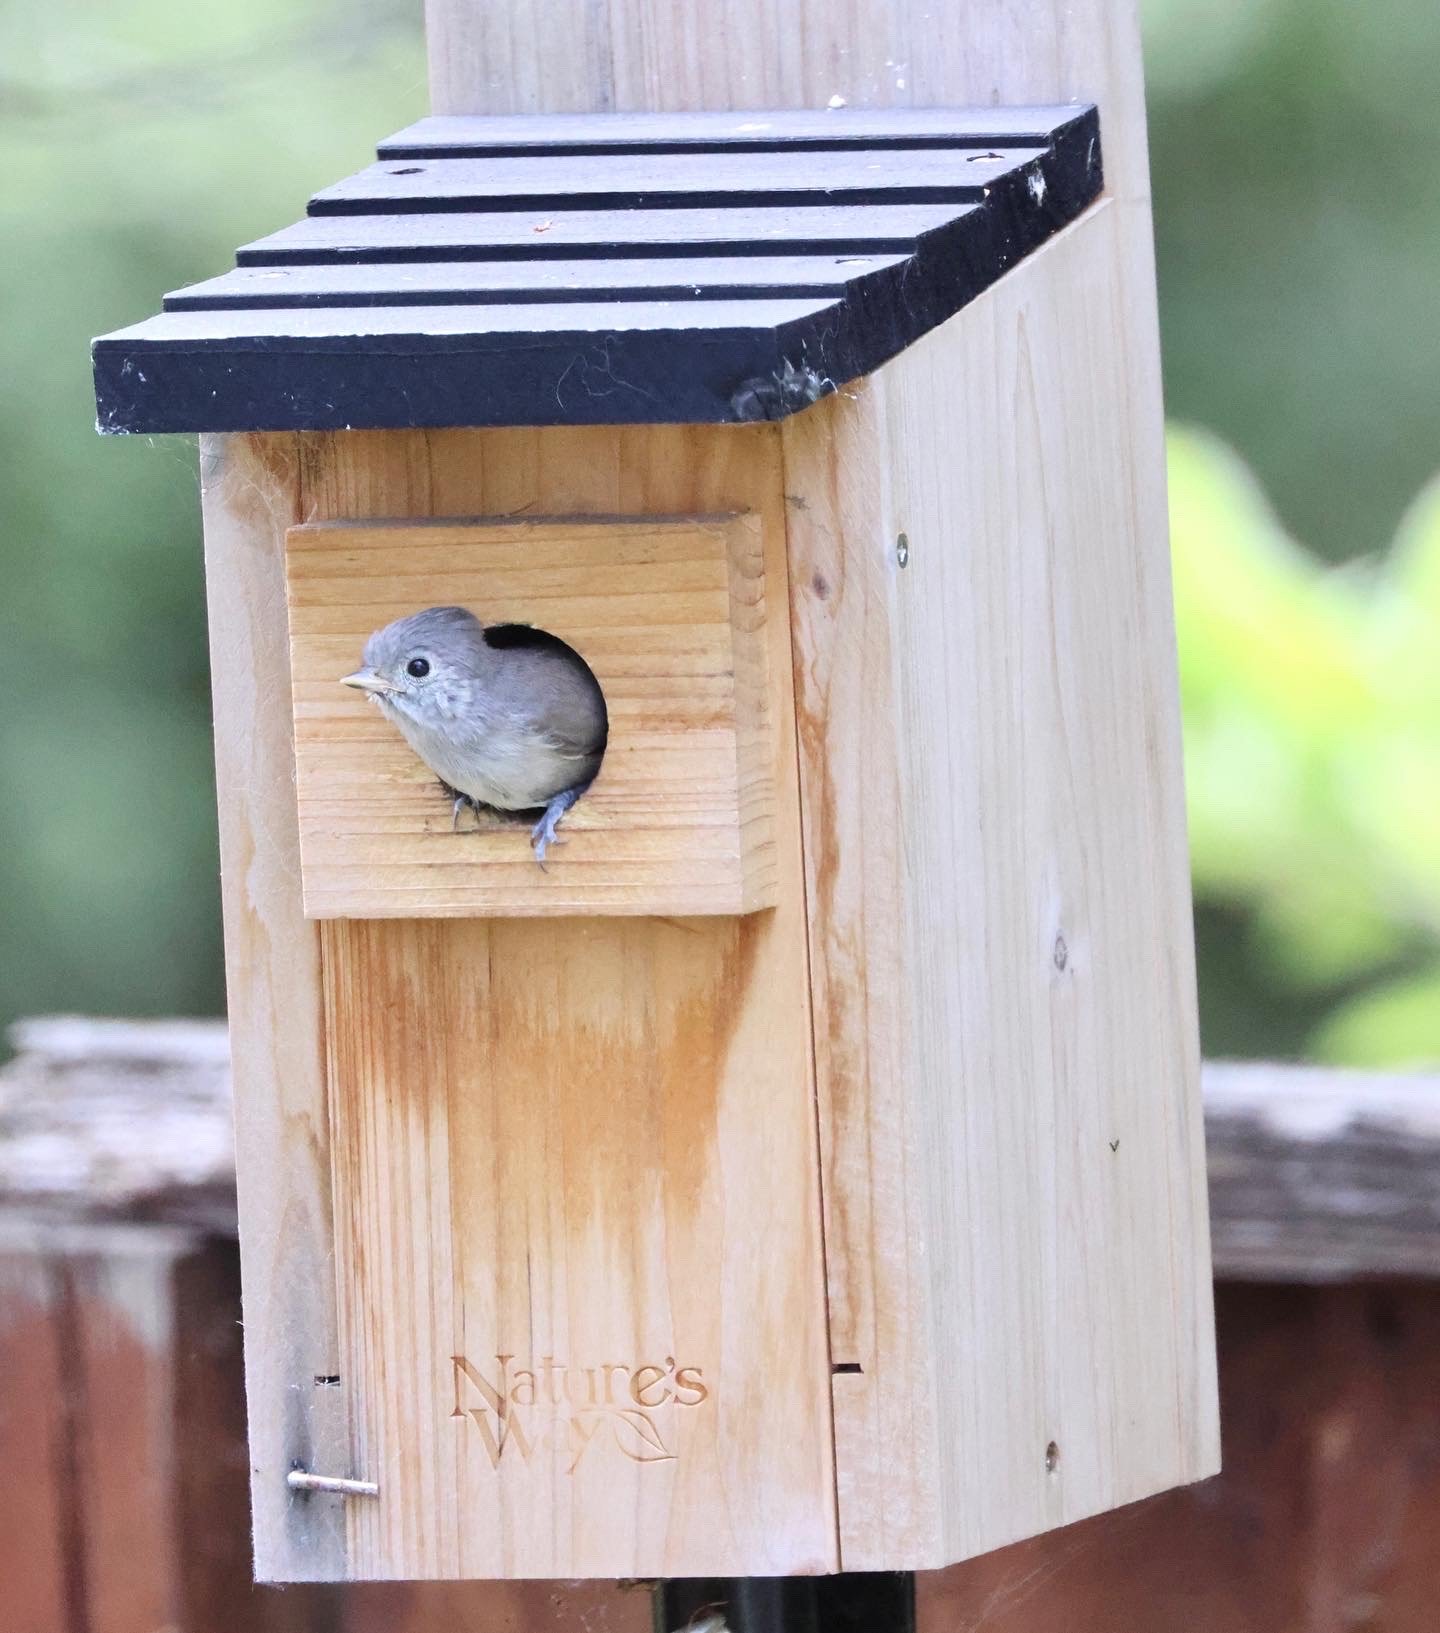 When Do Birds Use Birdhouses: Discover Optimal Times for Attracting Birds